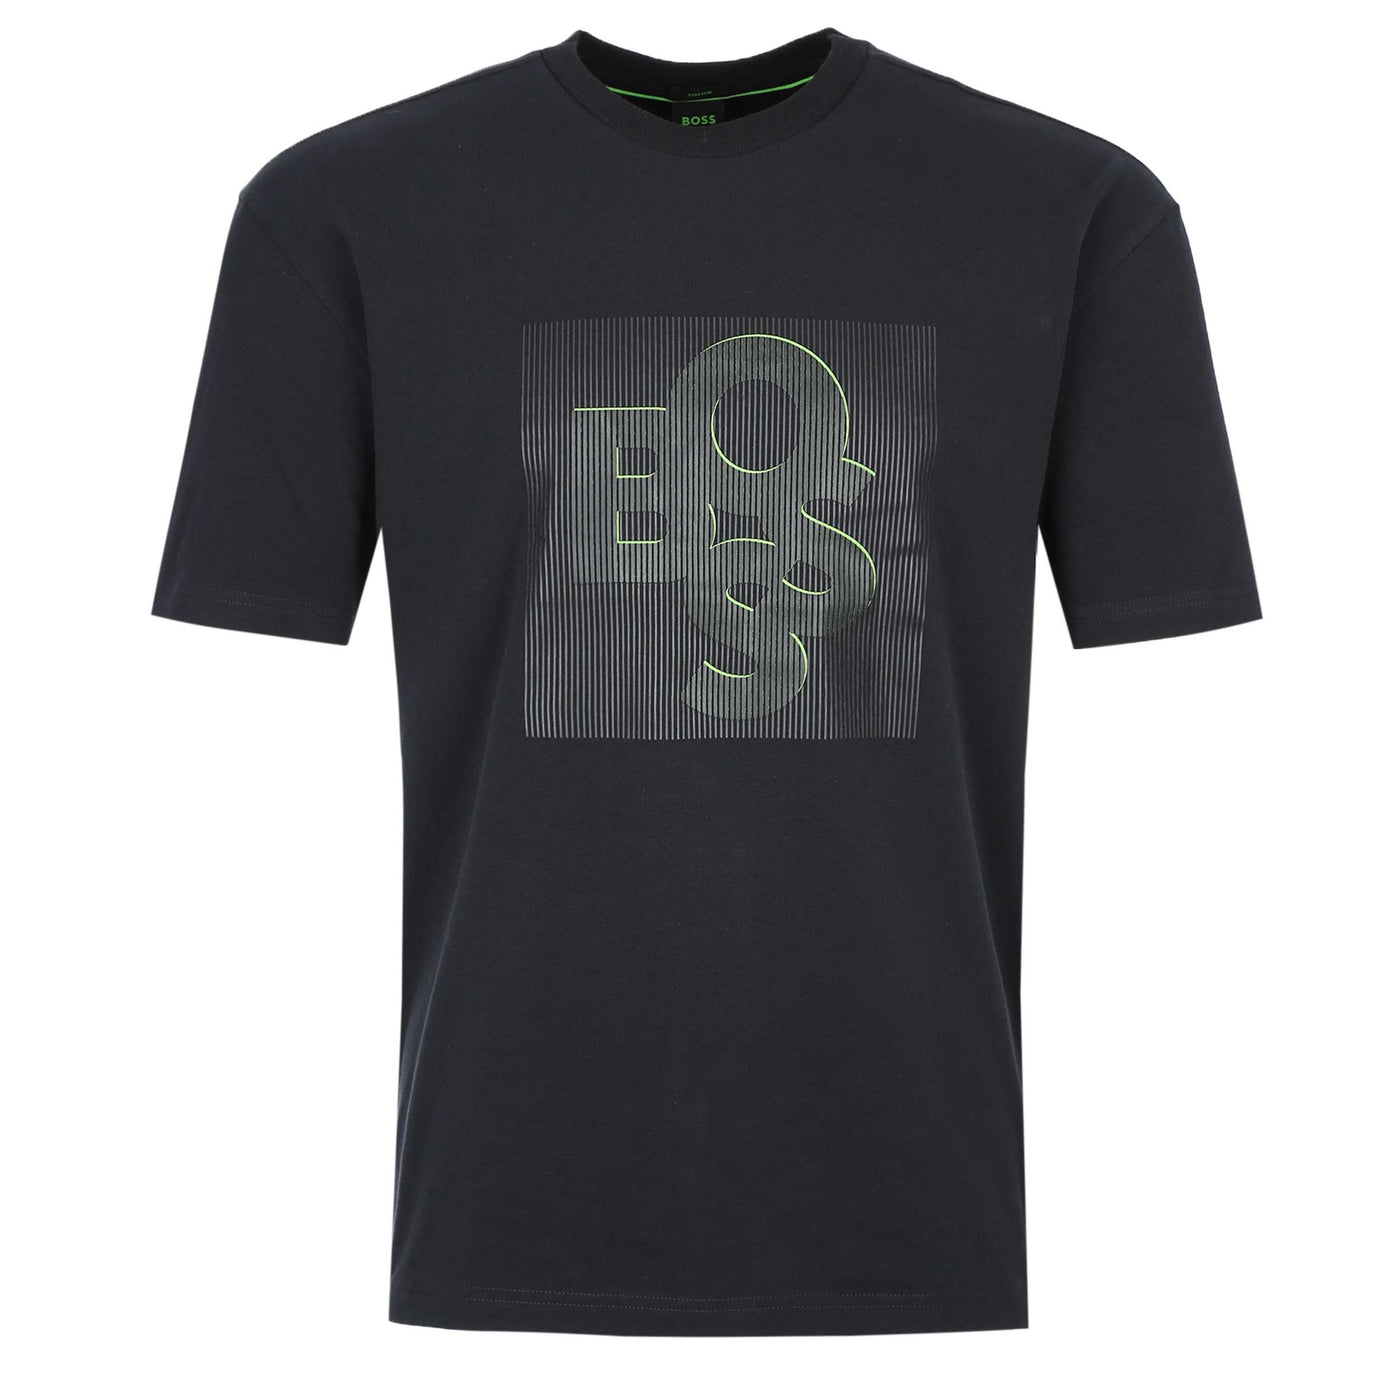 BOSS Tirexed T Shirt in Black